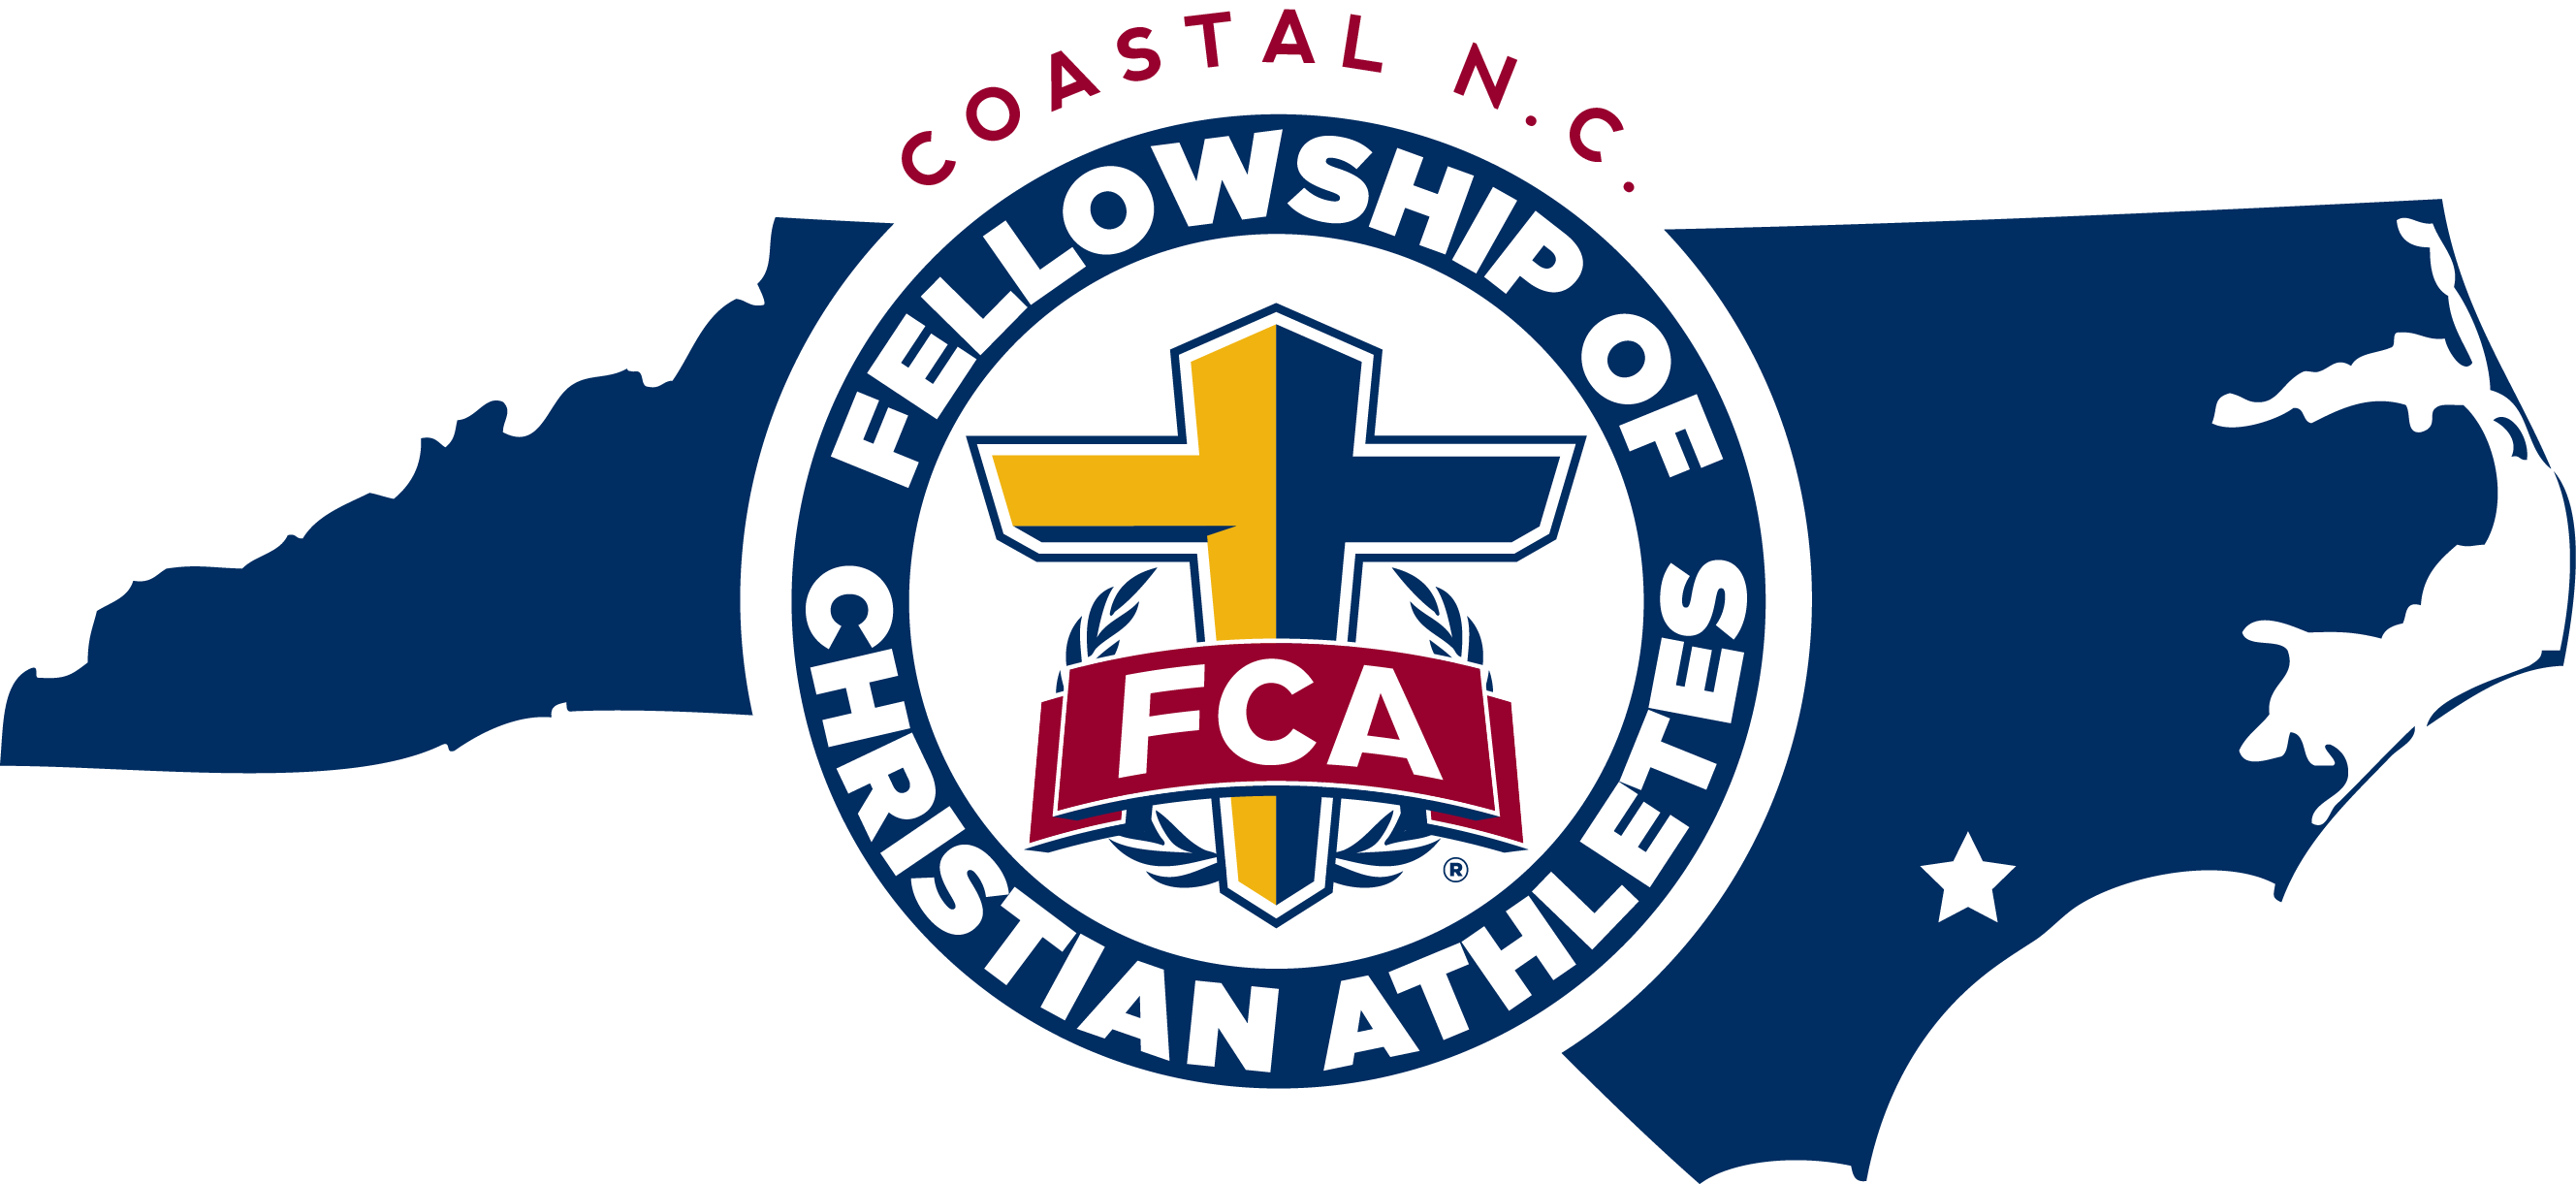 Fellowship of Christian Athletes Logo - Home. Coastal NC FCA